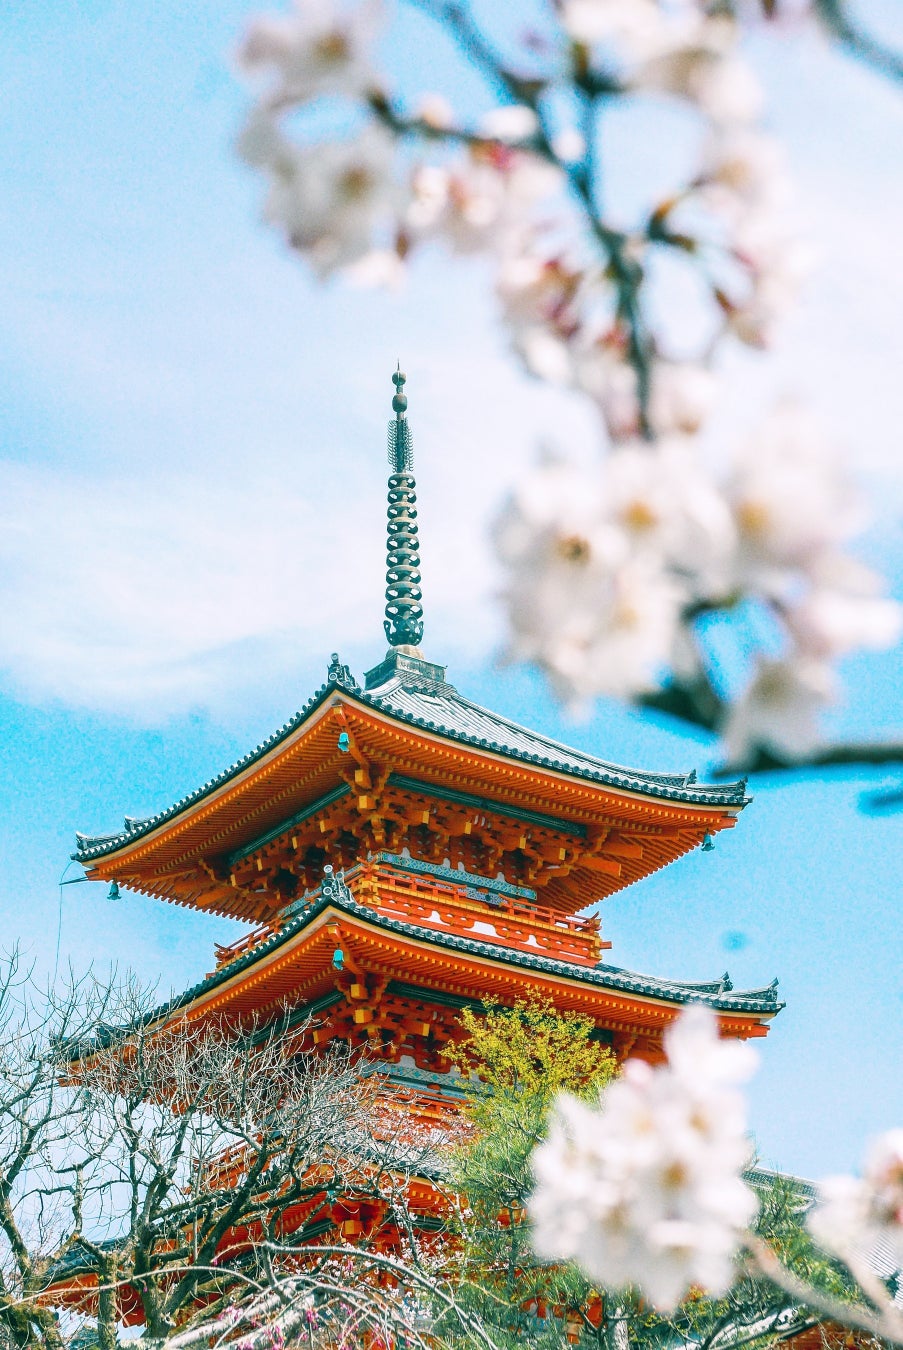 【SNSで話題の「雲ノ茶カフェ」が、苺と桜をテーマにした新作スイーツを販売開始】桜の季節を迎え、多くの観光客が訪れる京都で店舗ごとに春色スイーツが期間限定で登場